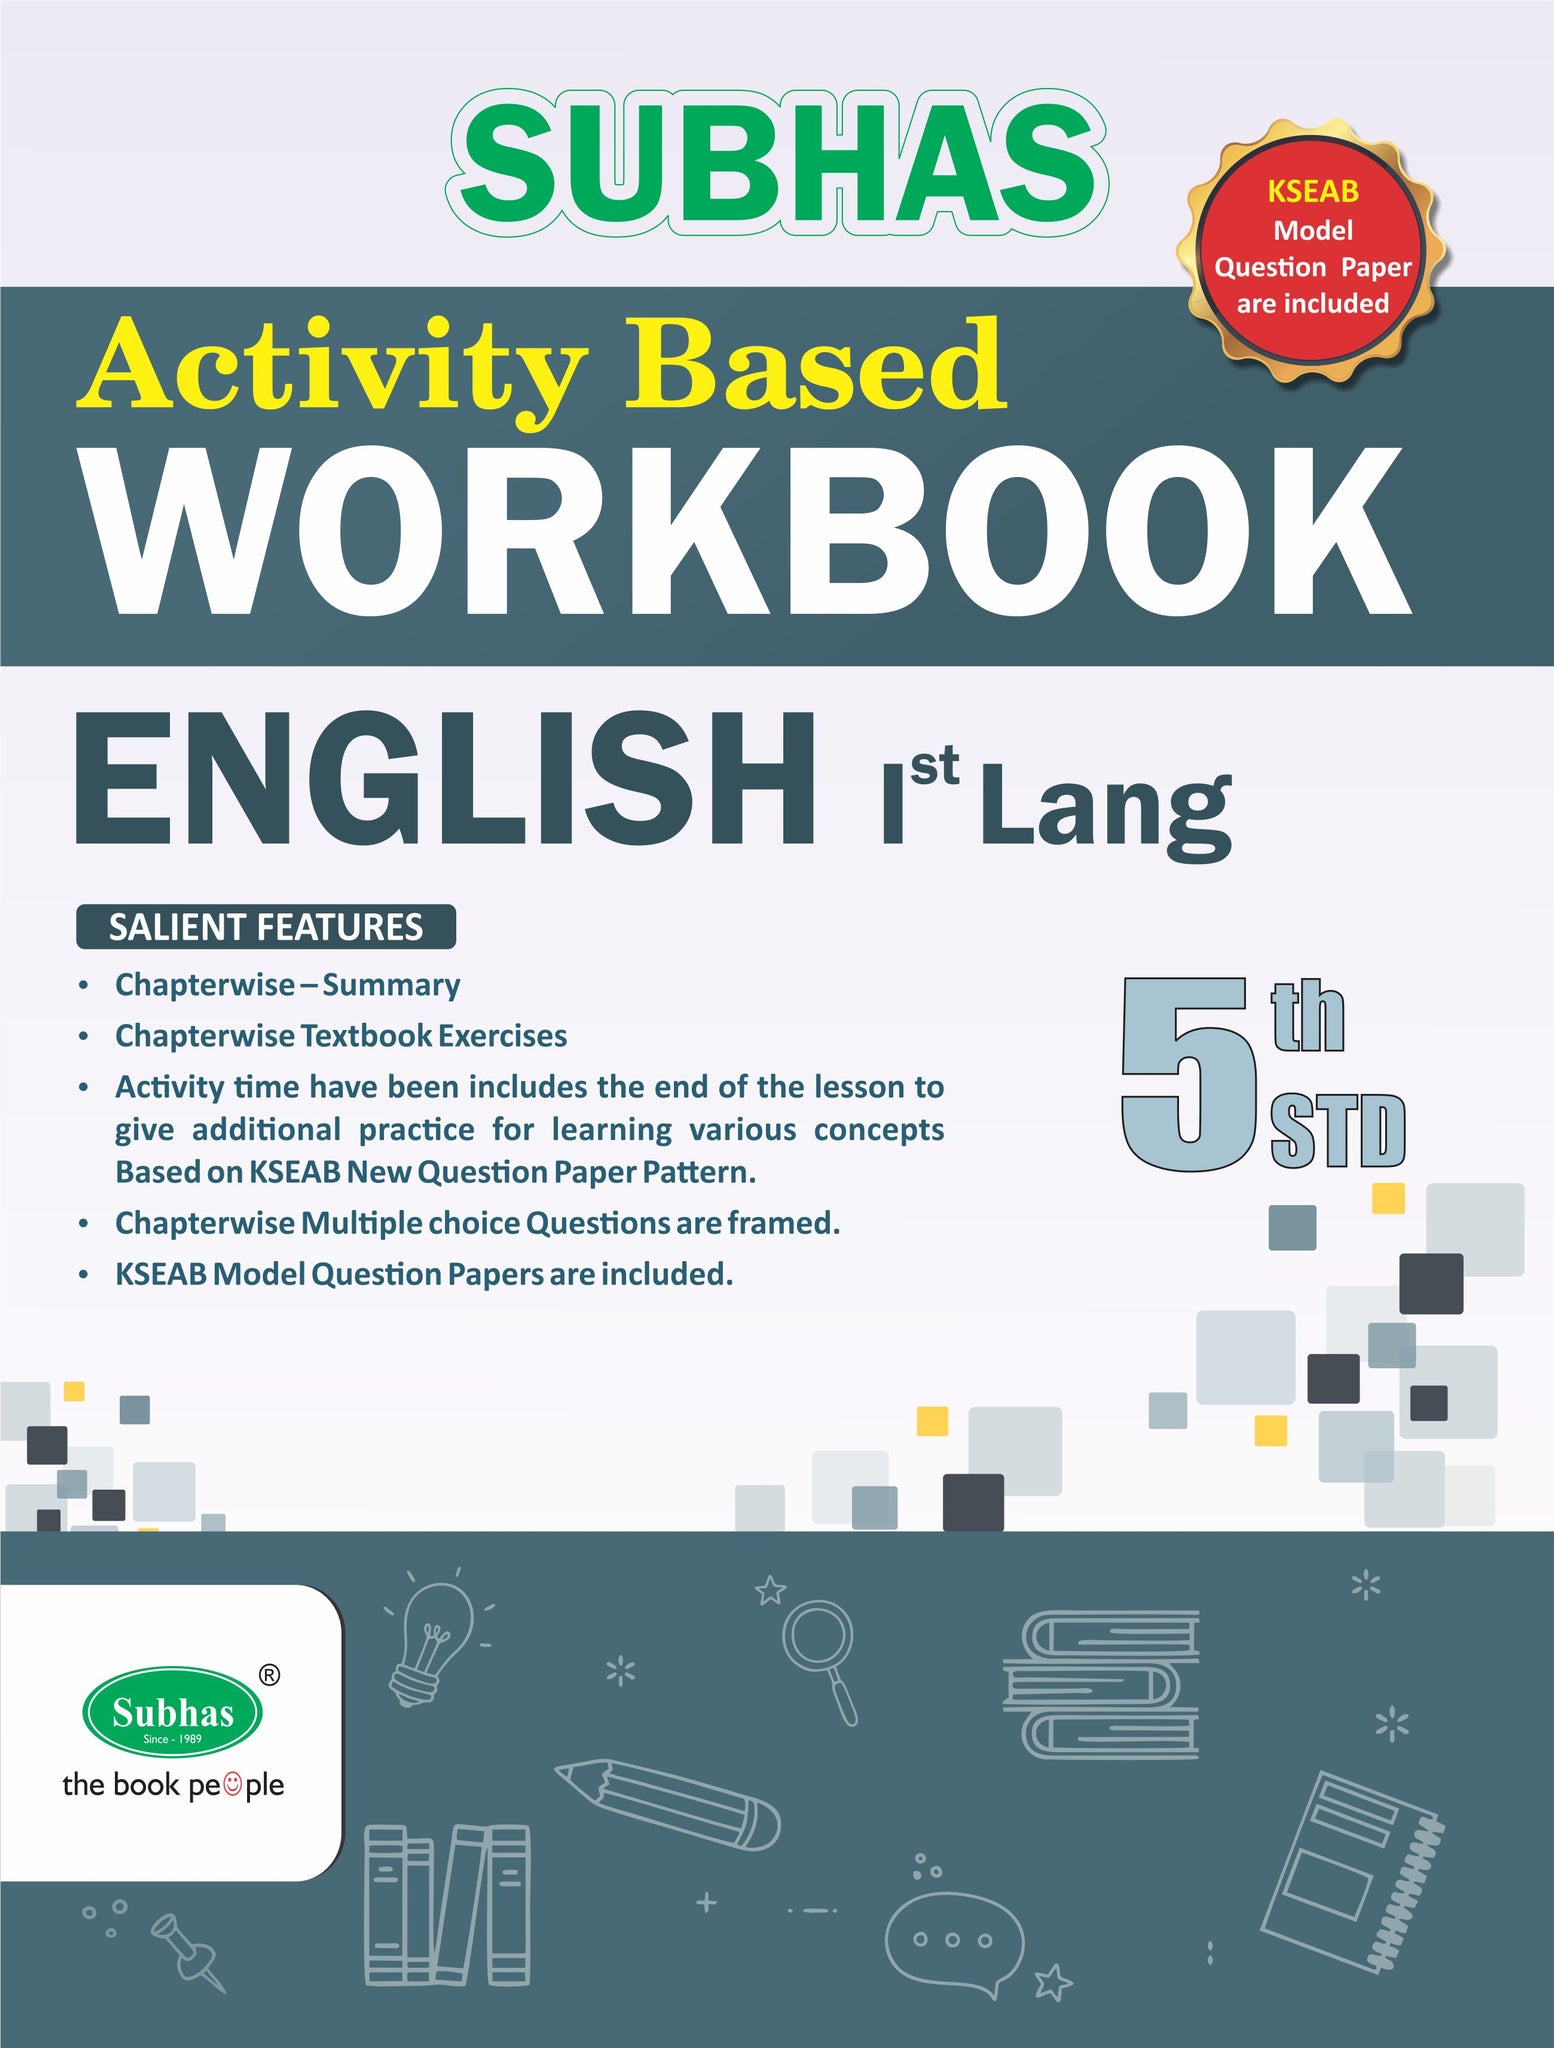 Subhas 5th Standard Activity Based Workbook English 1st Language